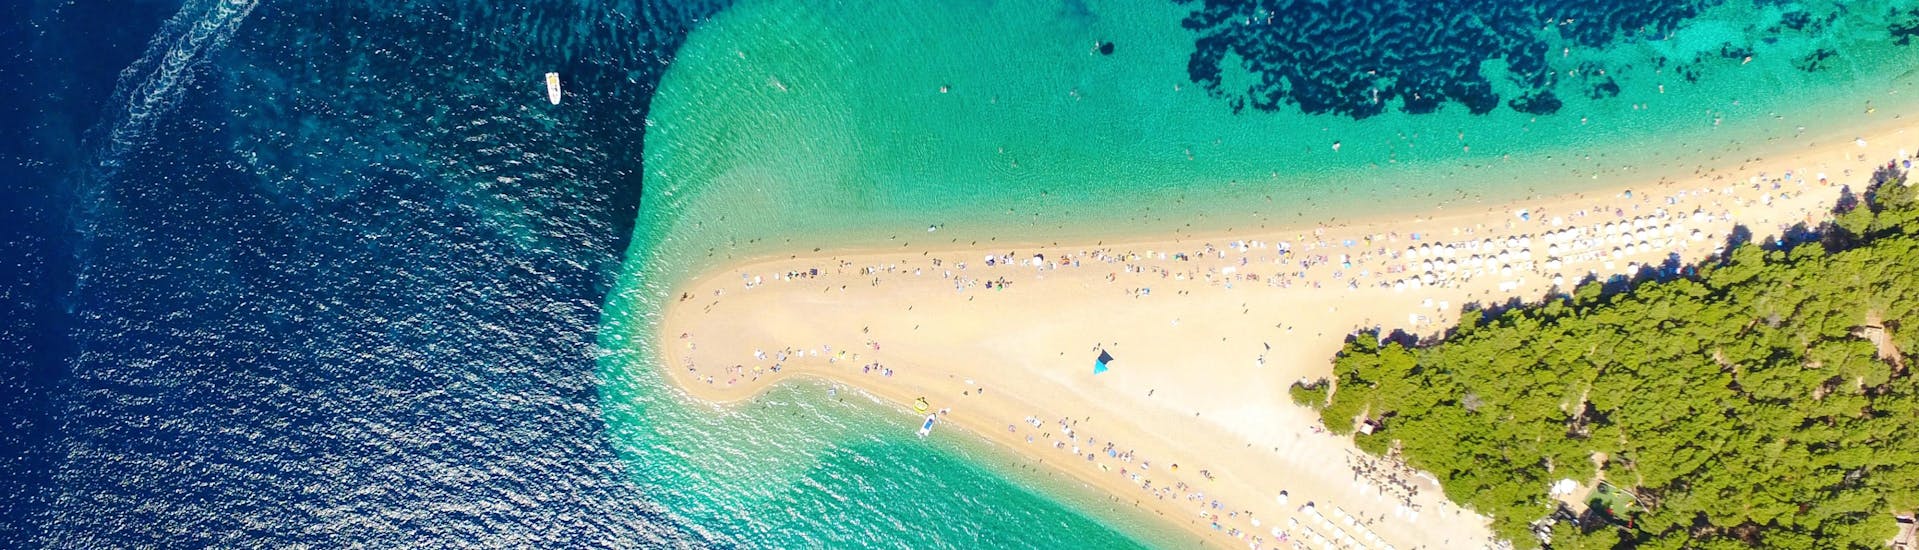 Vista aérea de la playa de Zlatni rat en Bol, isla de Brac, Croacia.